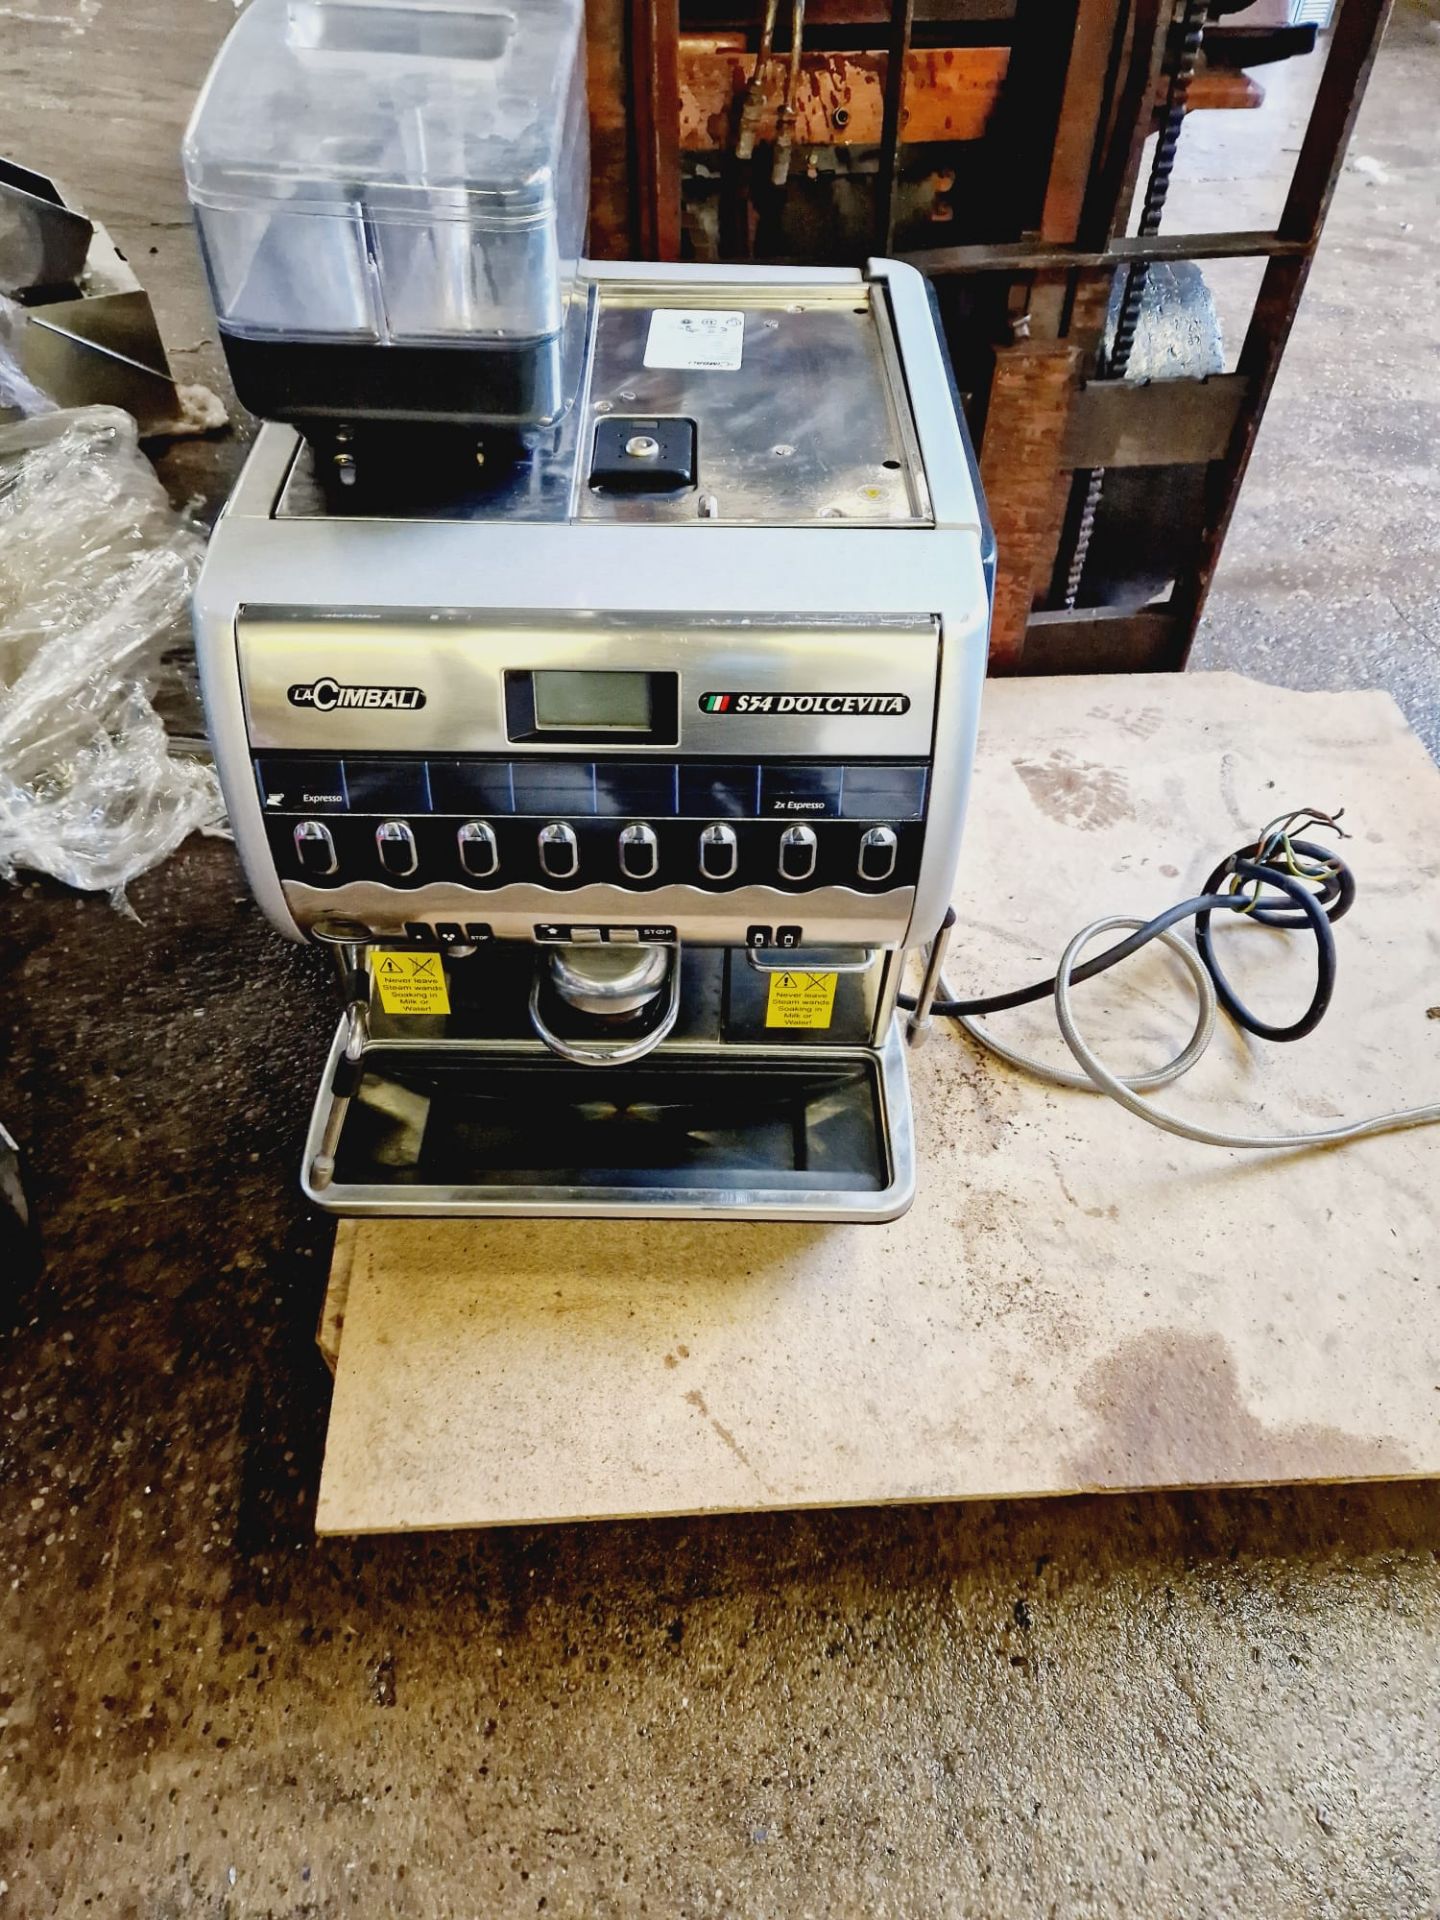 LACIMBALI S54 DOLCEVITA AUTOMATIC COFFEE MACHINE - UNTESTED - Image 3 of 4